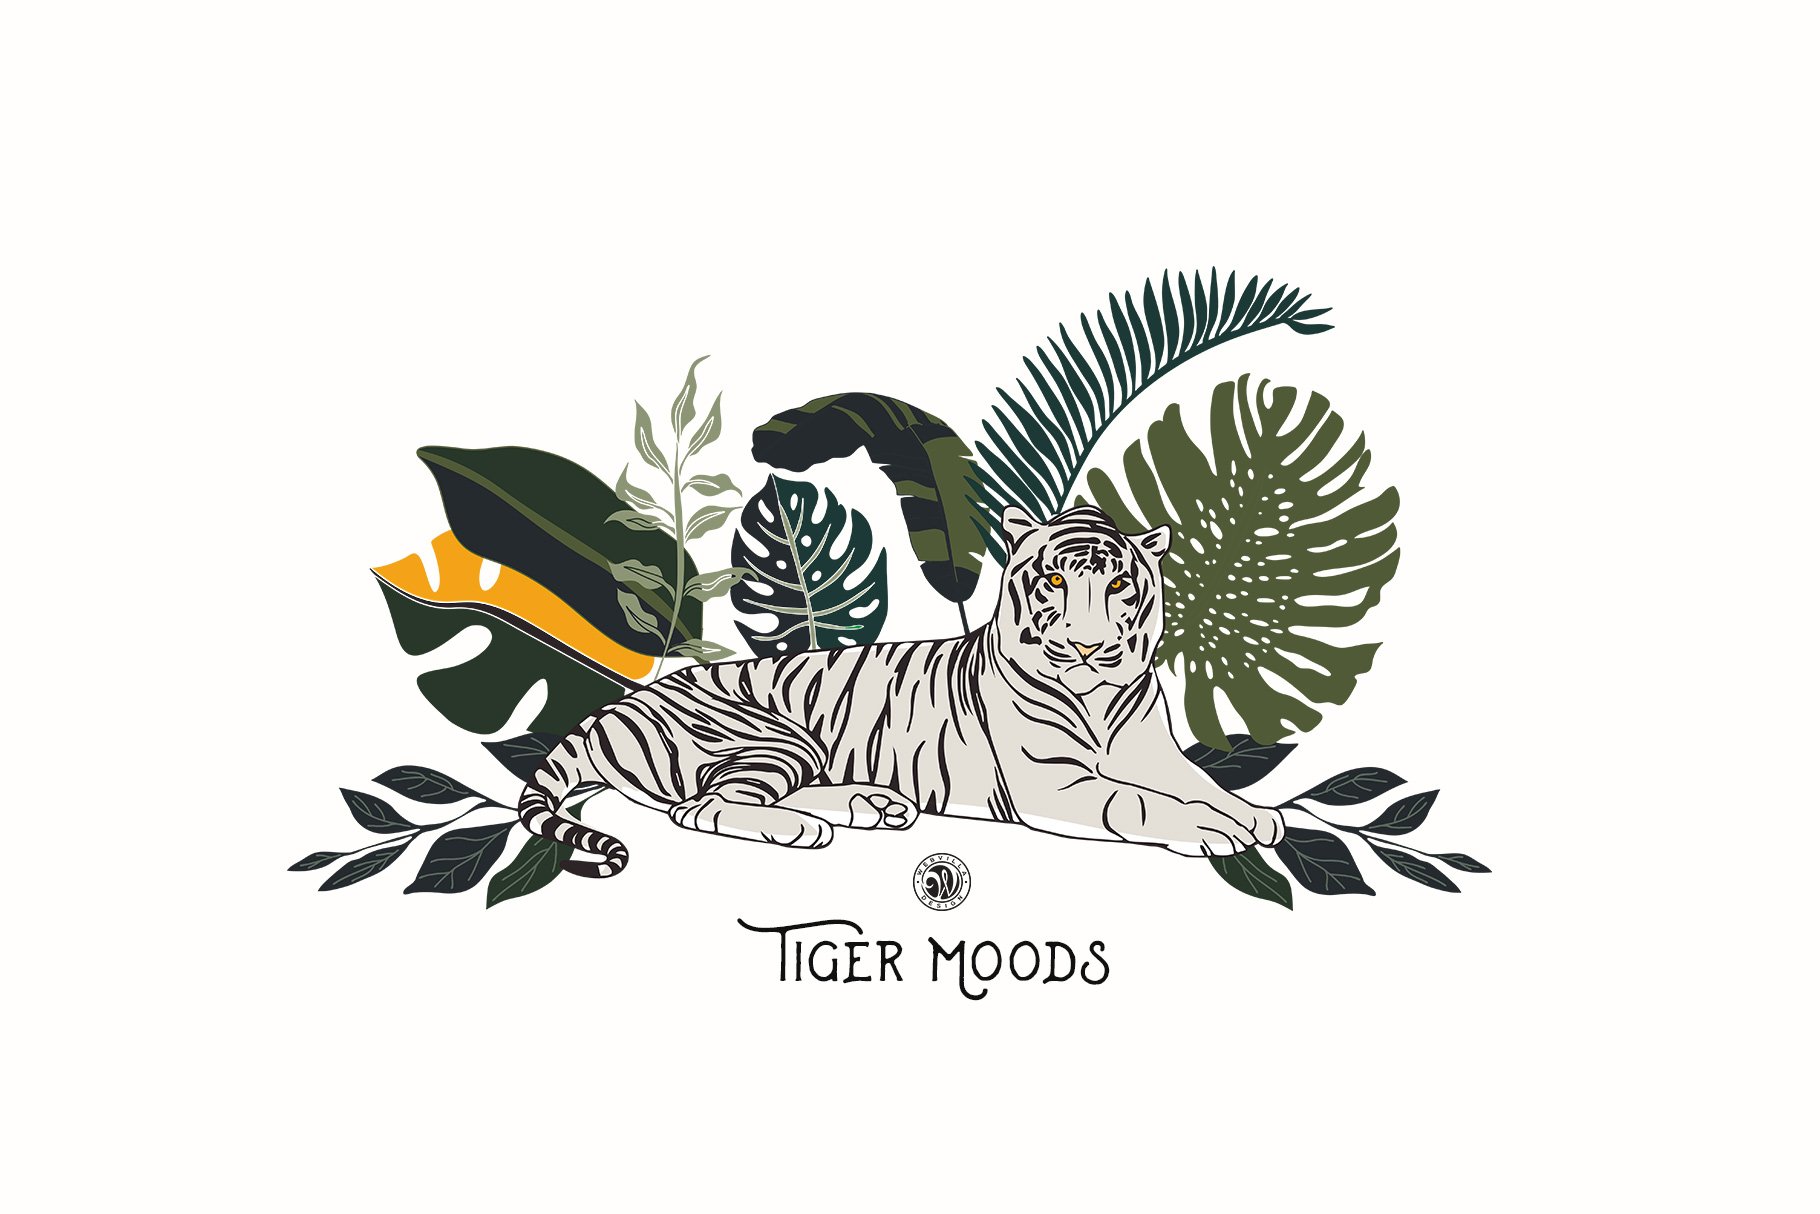 Tiger Moods